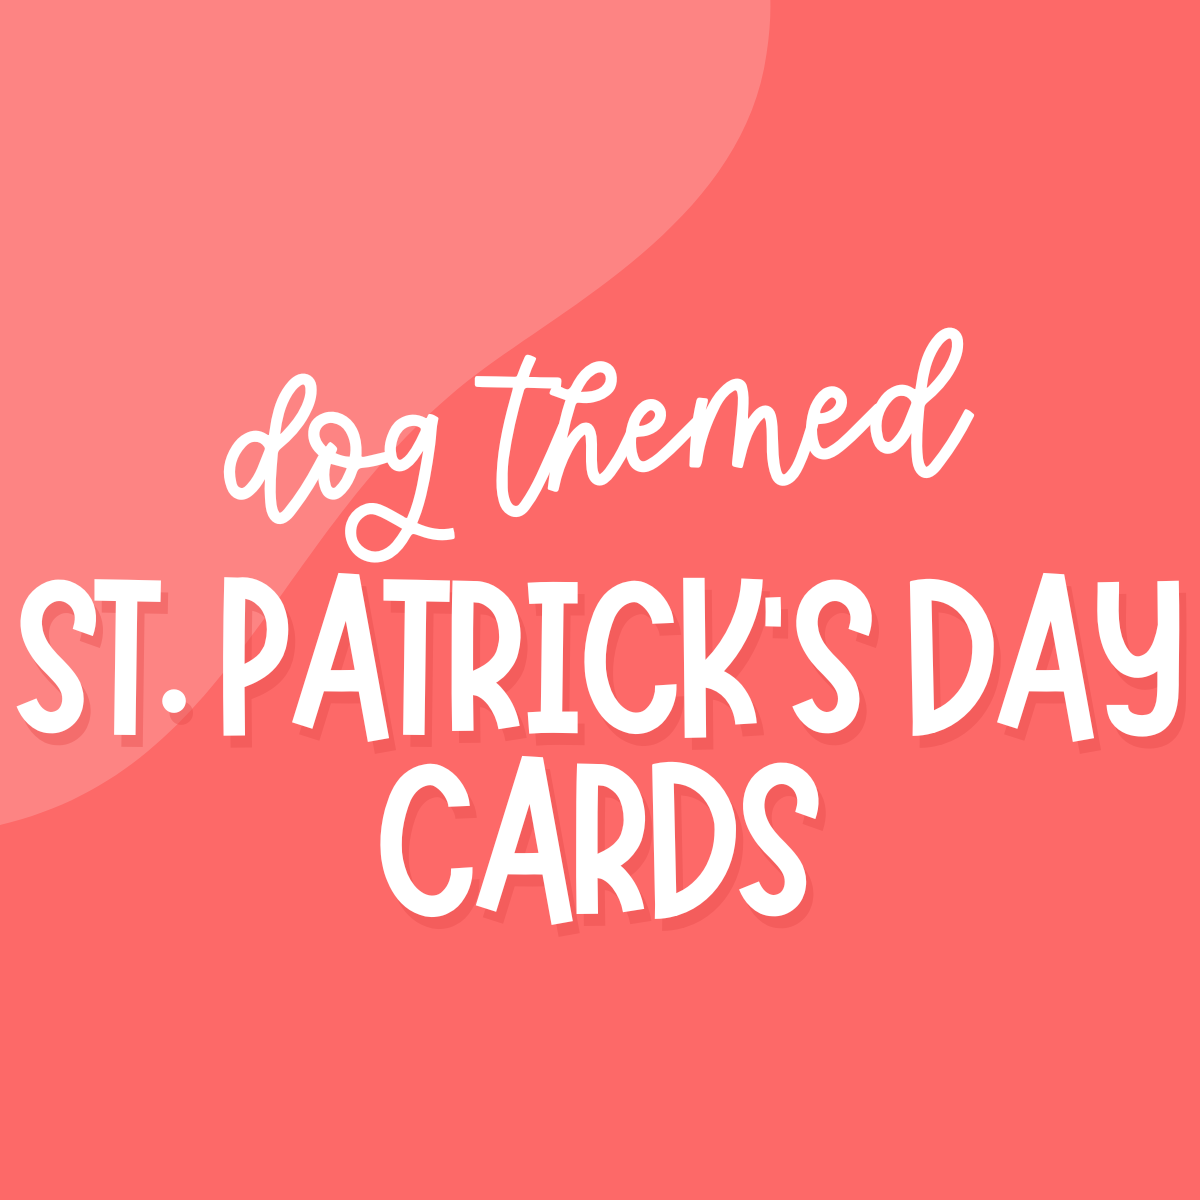 Dog Themed St. Patrick's Day Cards